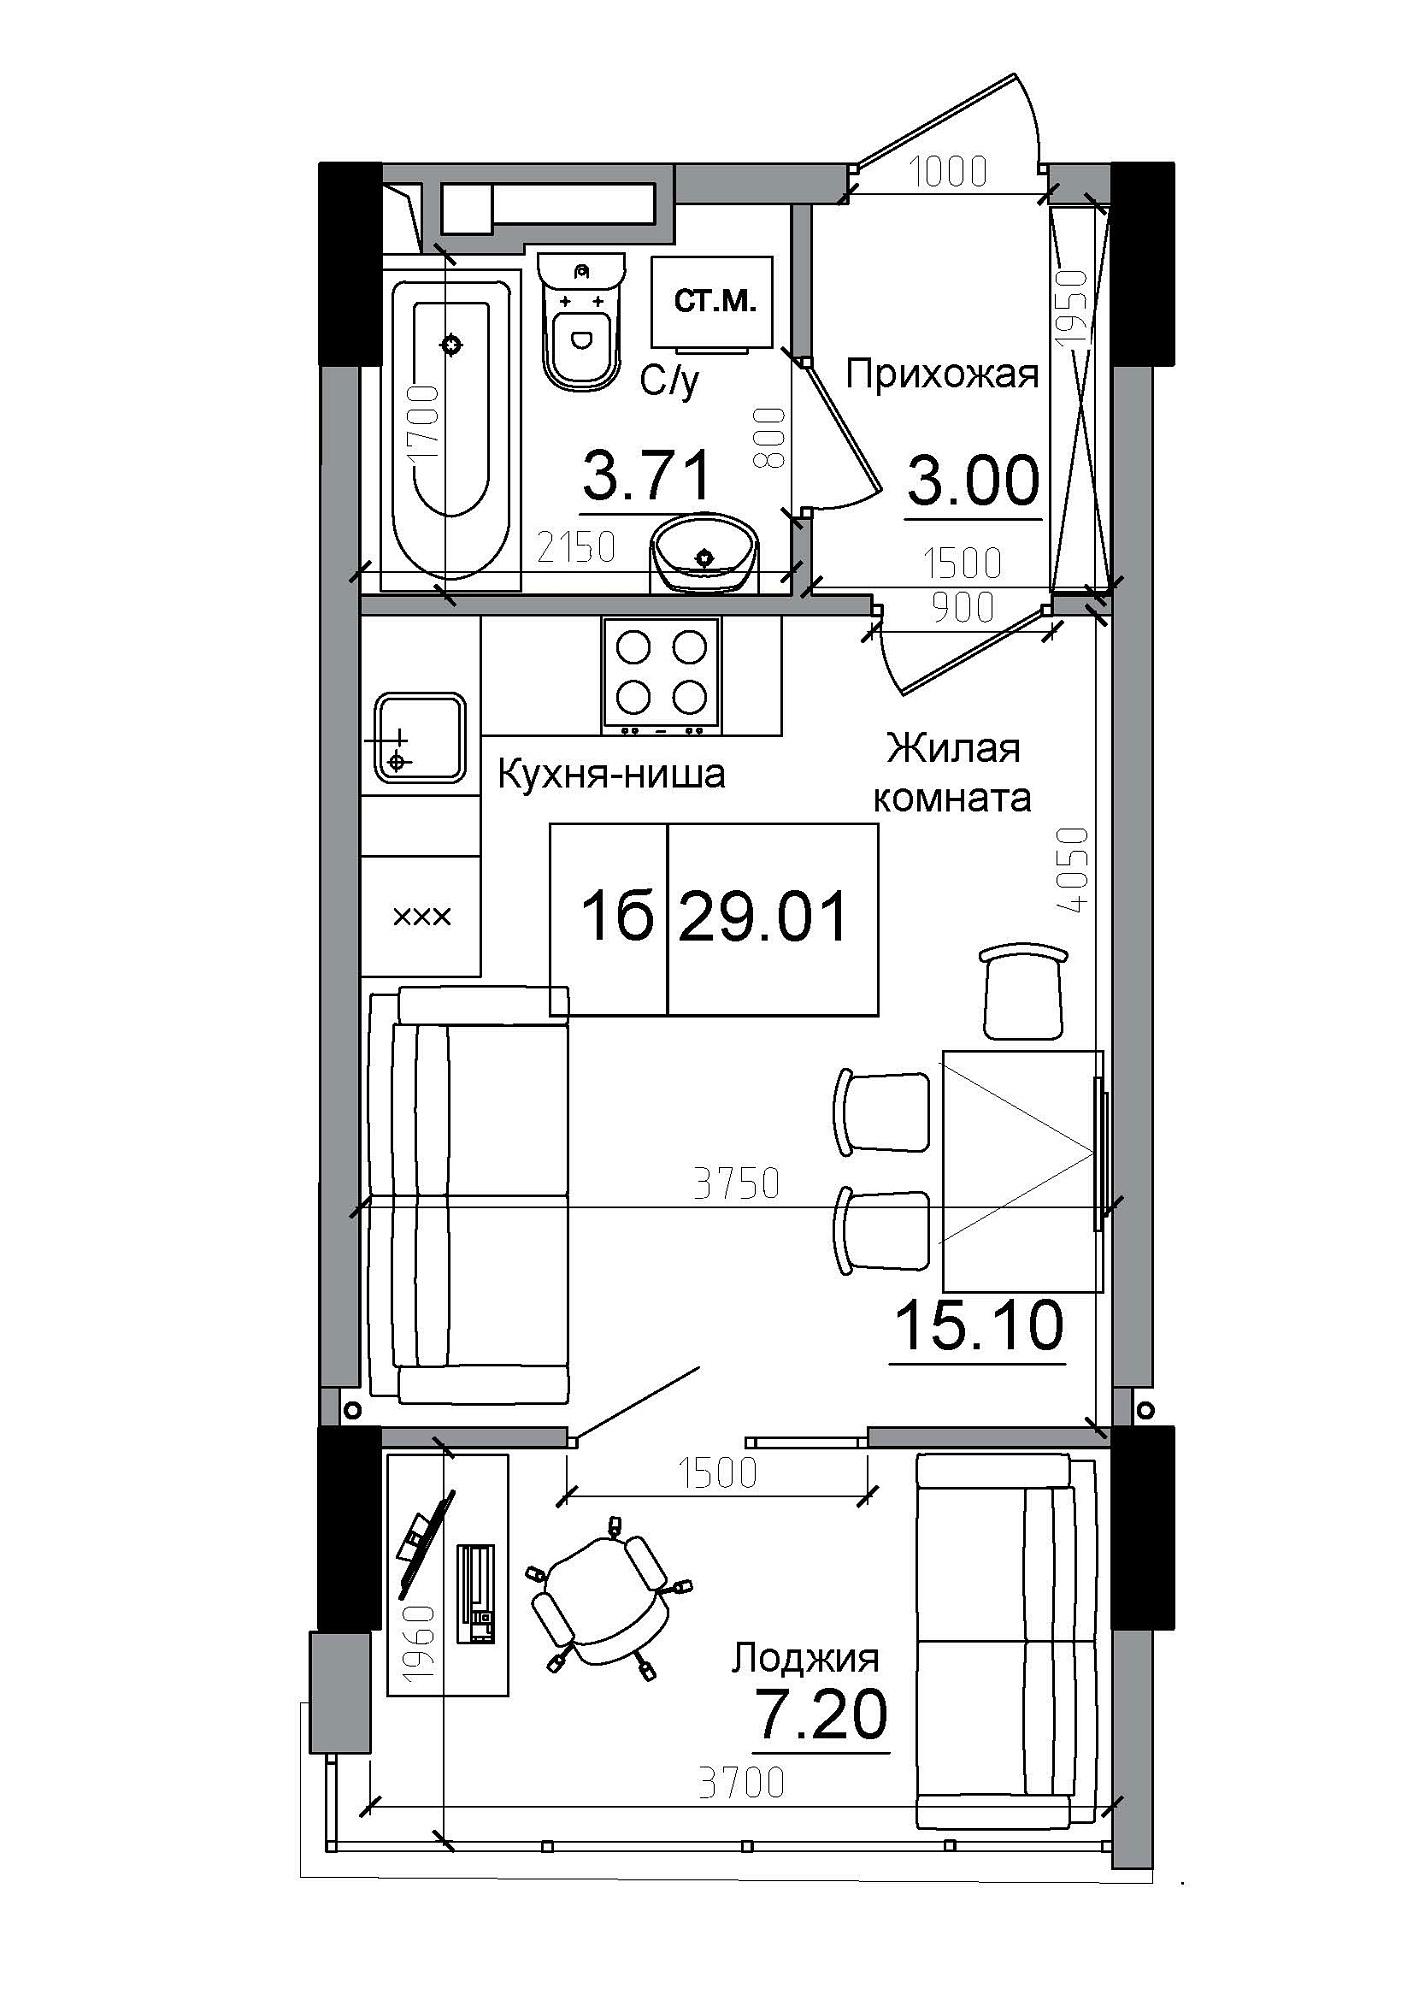 Планировка Smart-квартира площей 29.01м2, AB-12-09/00002.